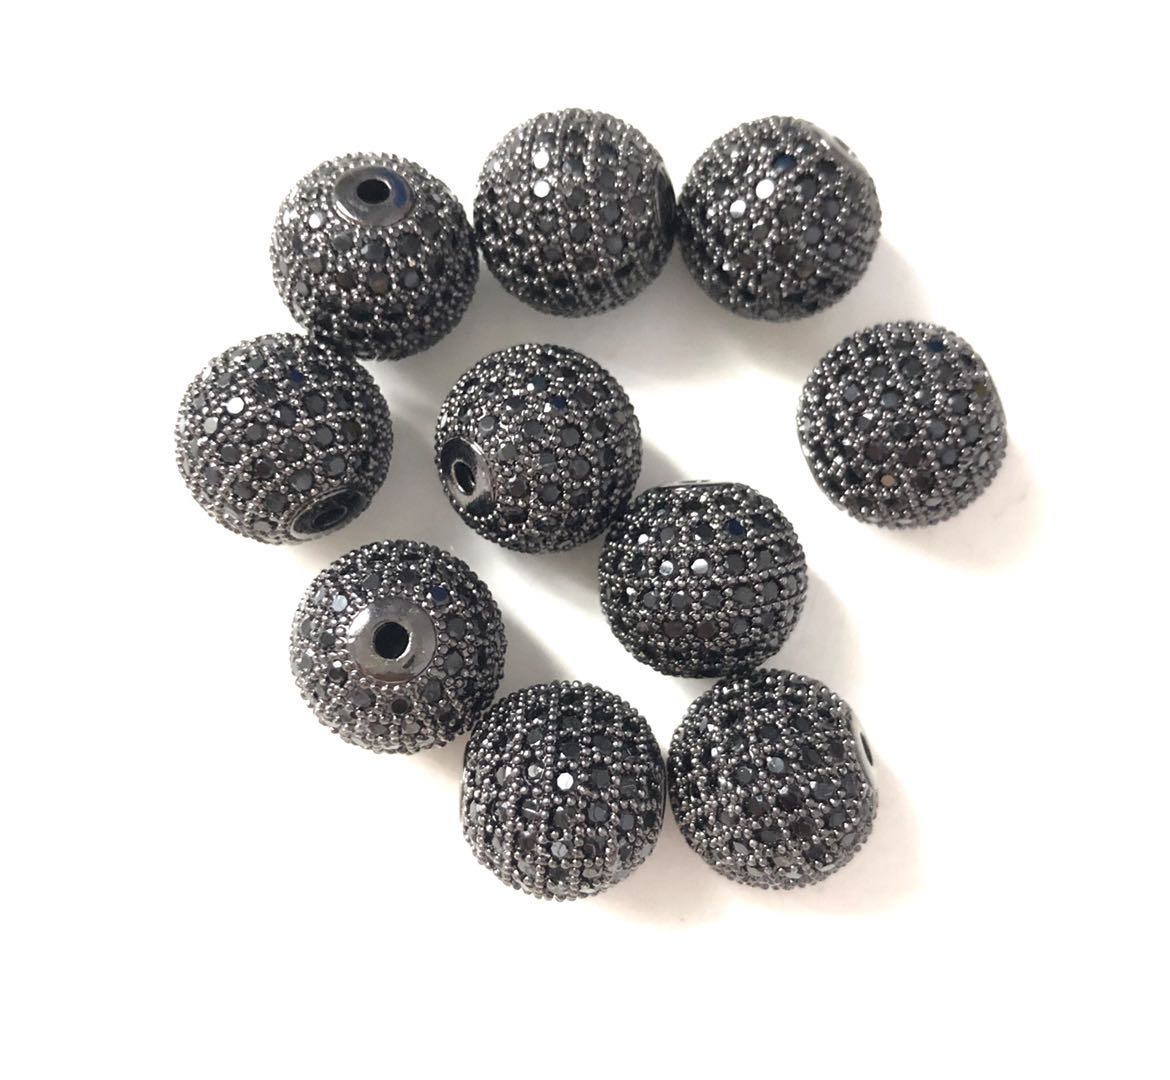 10-20pcs/lot 12mm Black CZ Paved Ball Spacers Black CZ Paved Spacers 12mm Beads Ball Beads Charms Beads Beyond